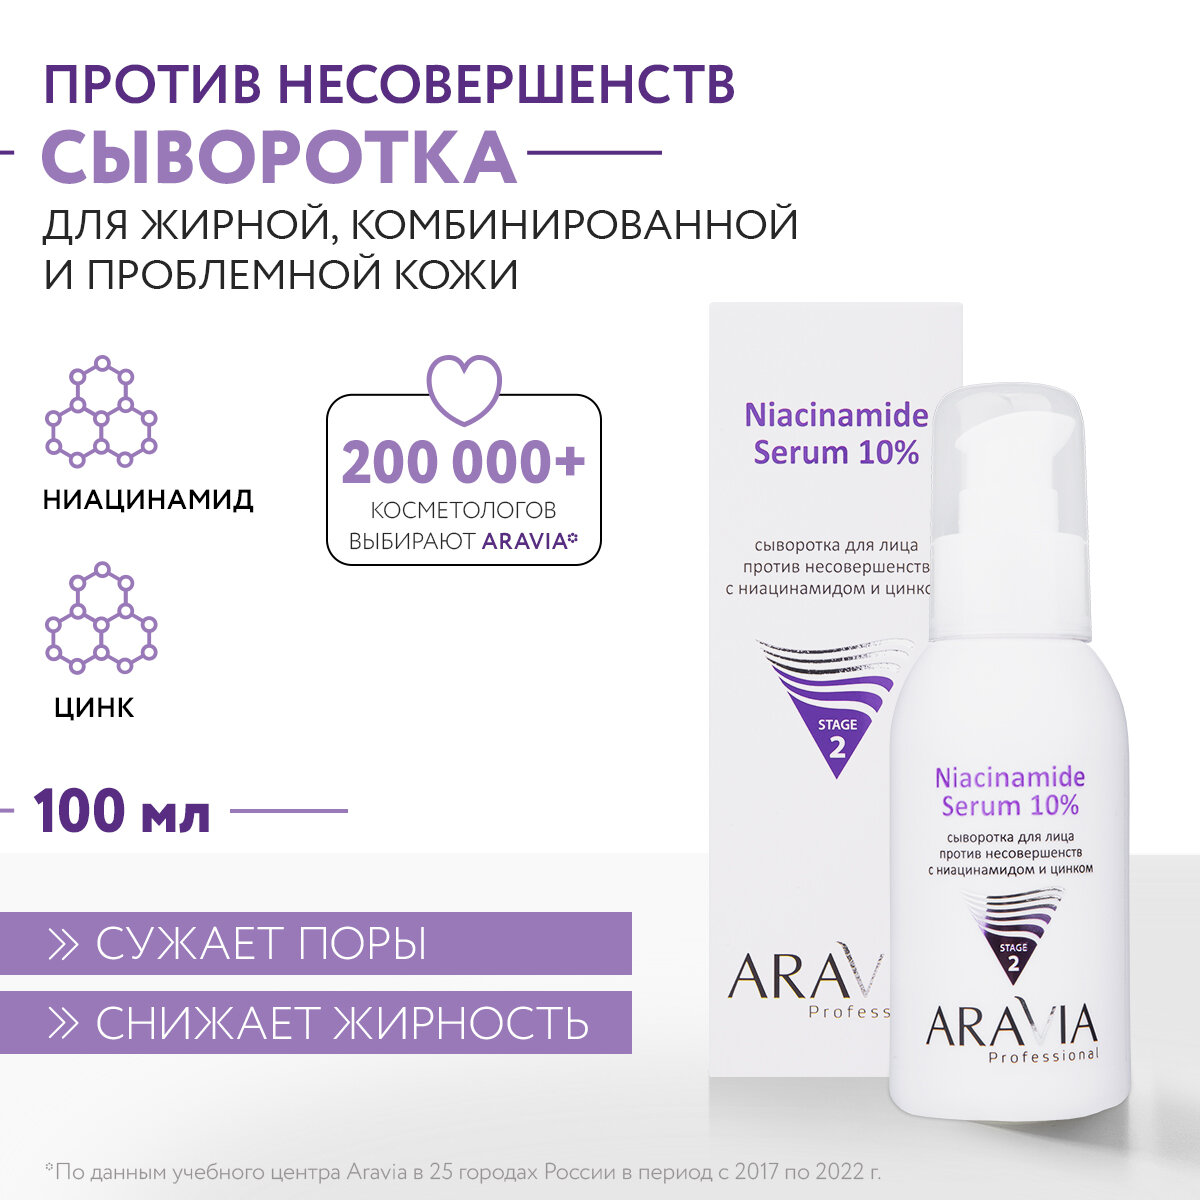 ARAVIA Сыворотка для лица против несовершенств с ниацинамидом и цинком Niacinamide Serum 10%, 100 мл